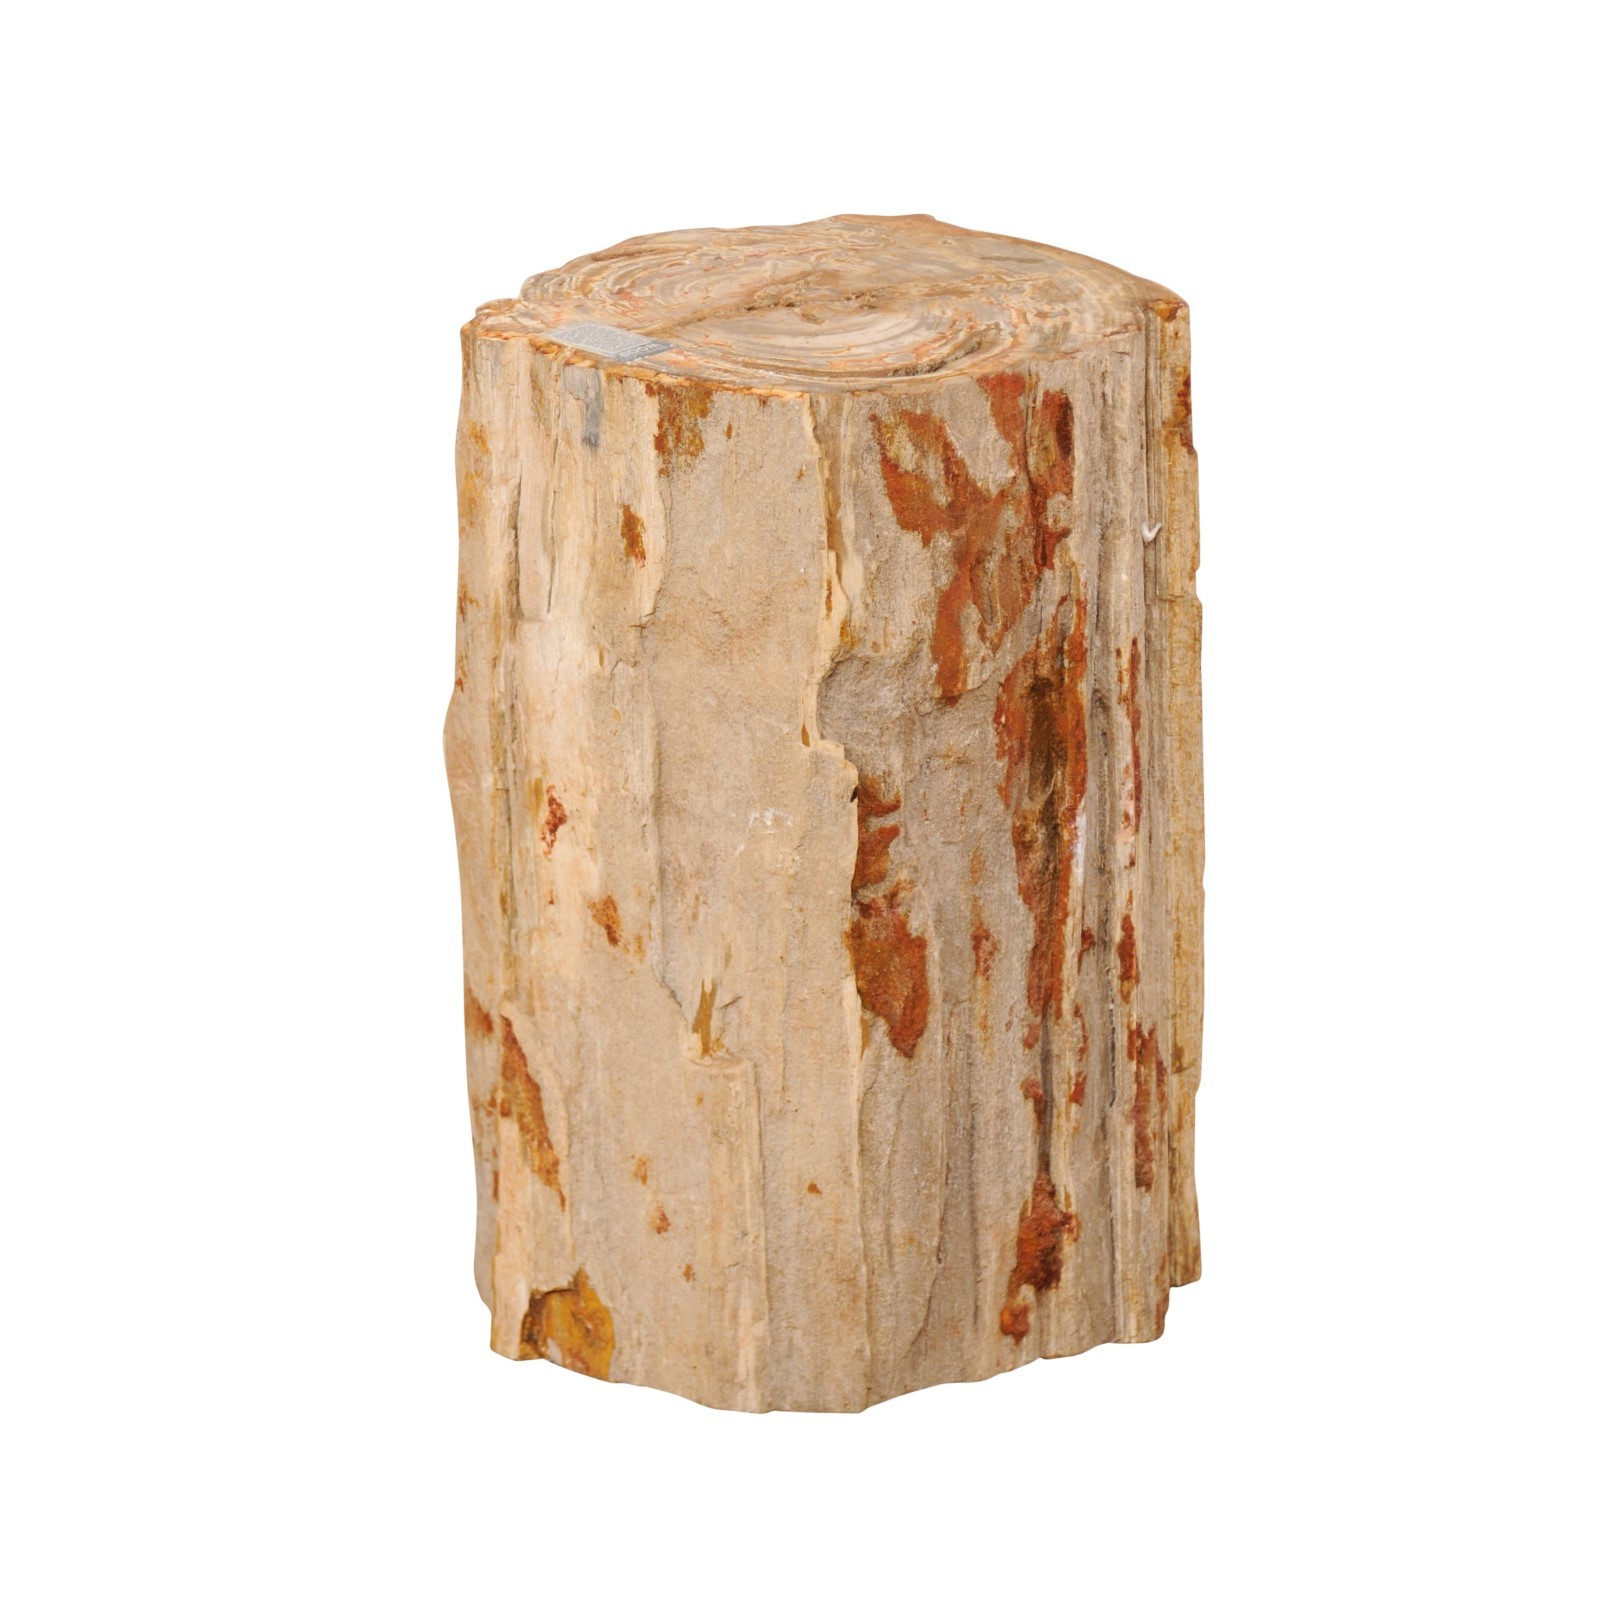 Live-Edge Petrified Wood Stool or Table